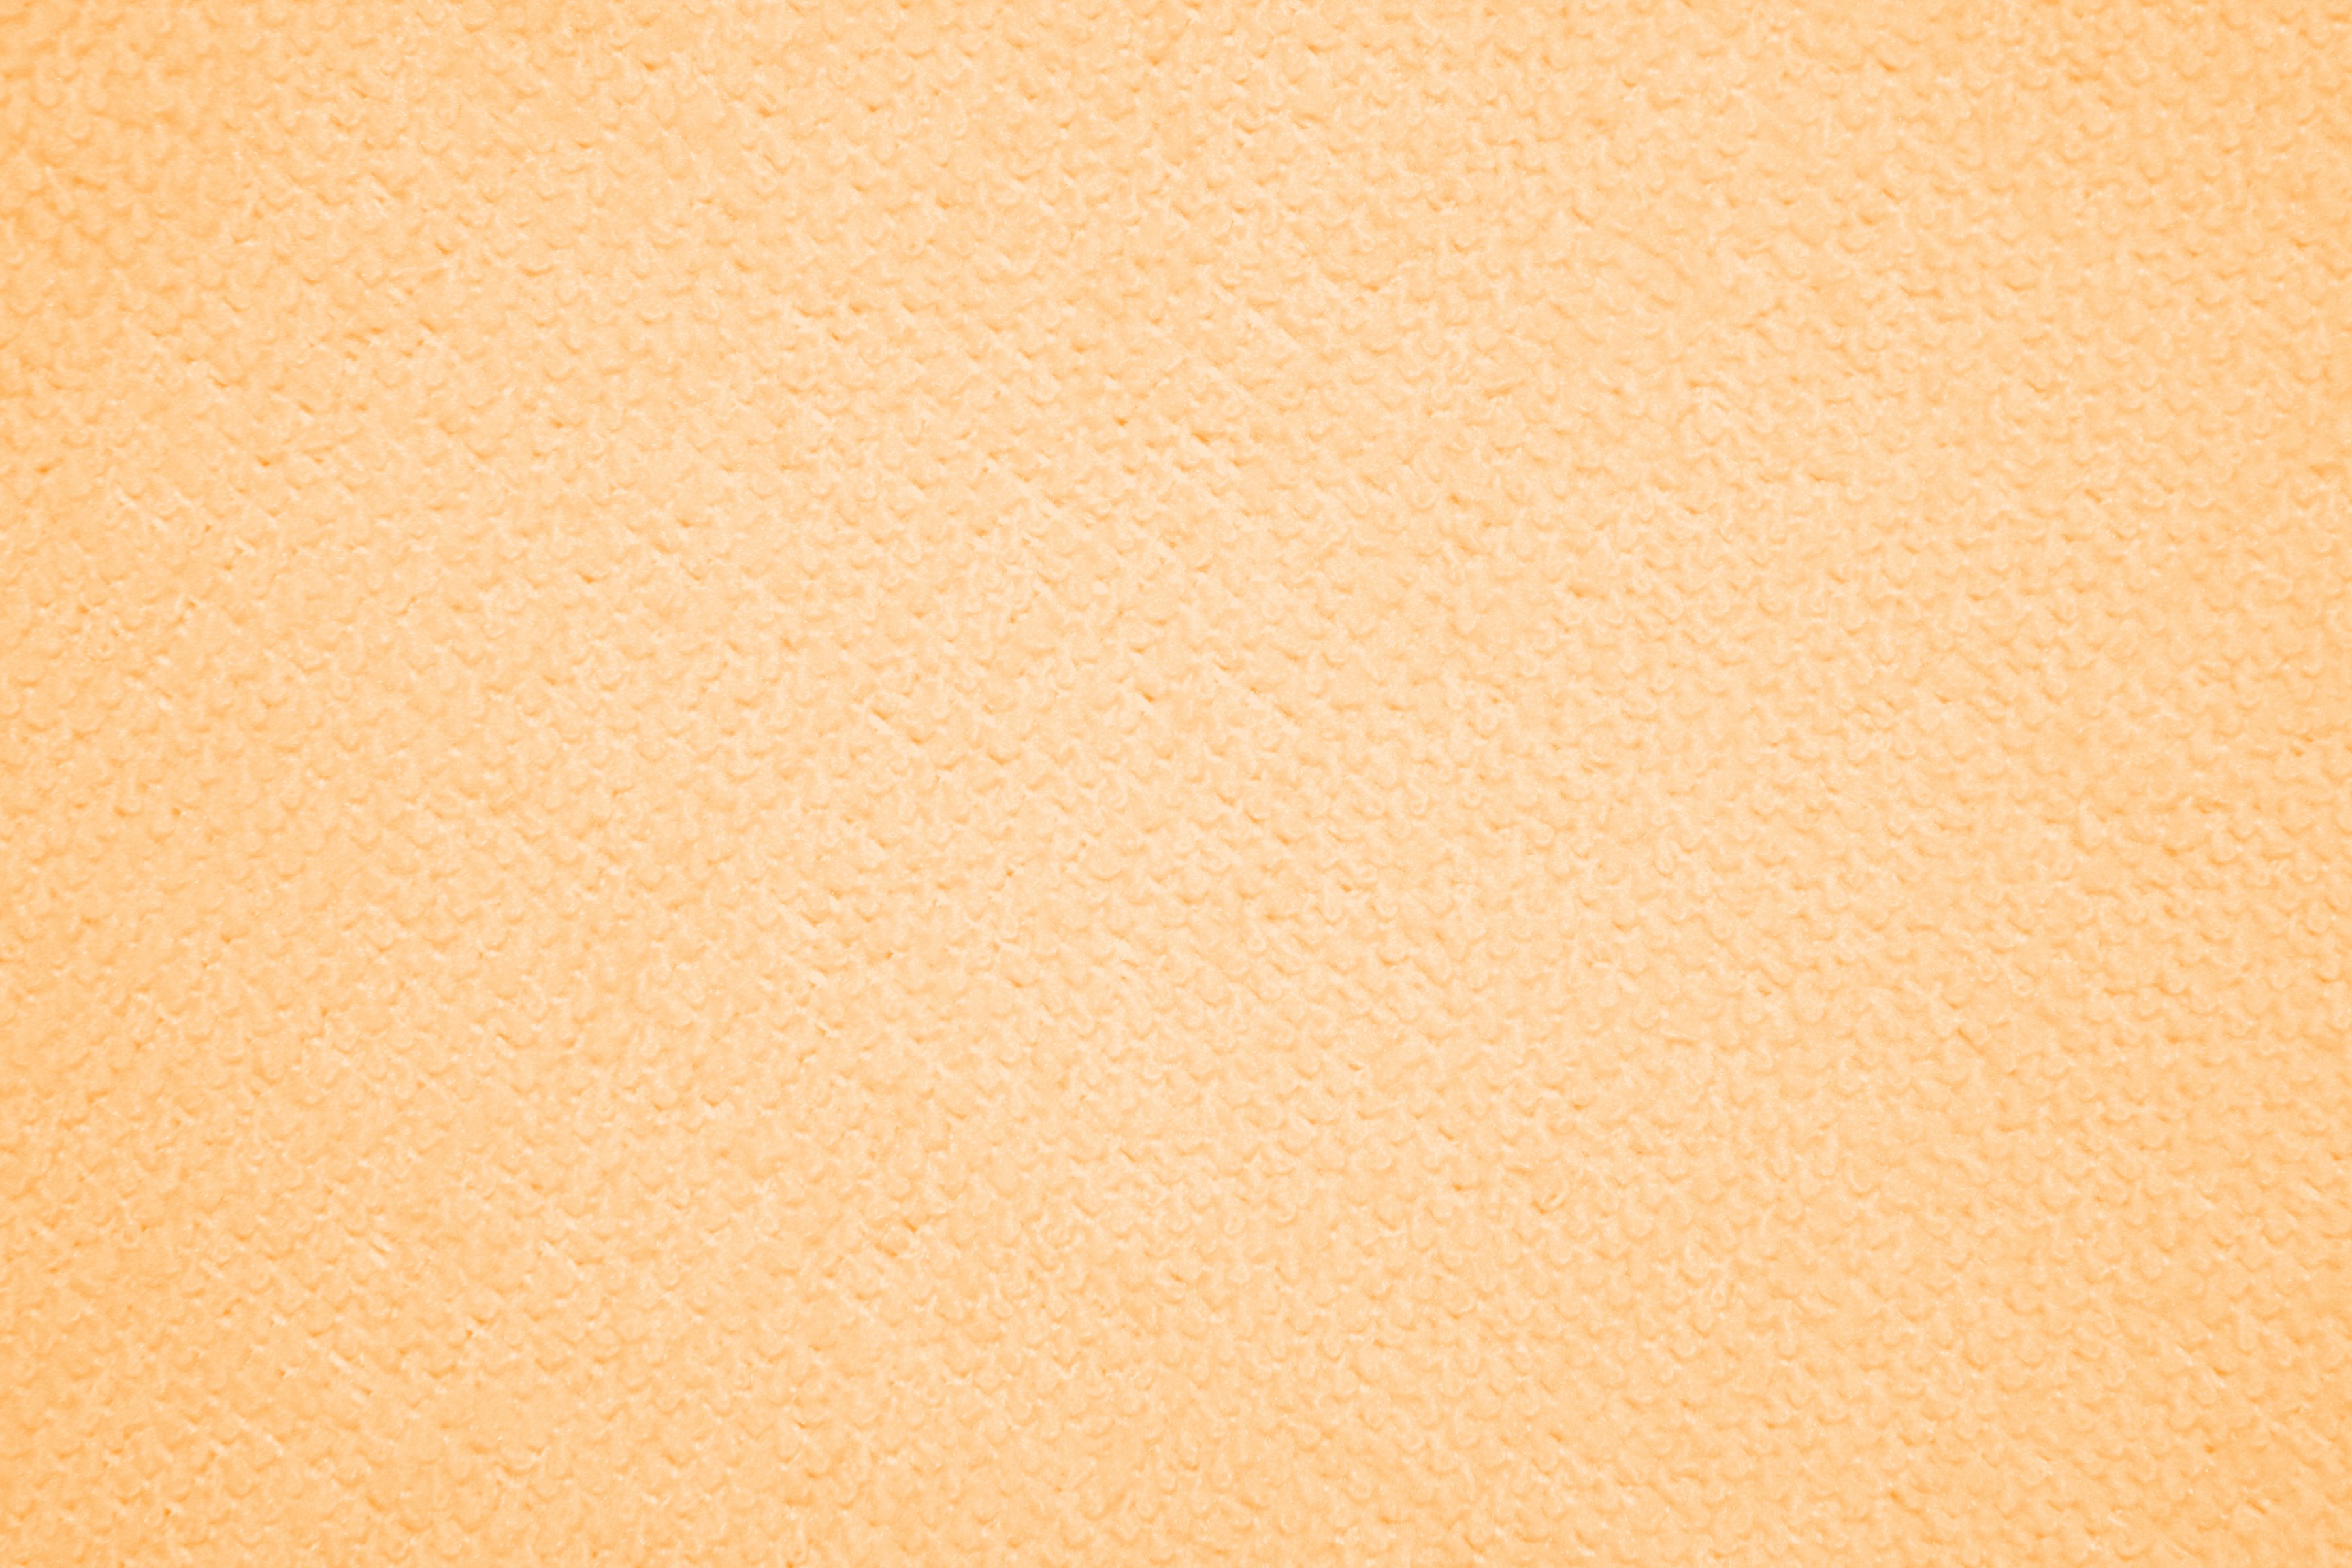 light orange background images